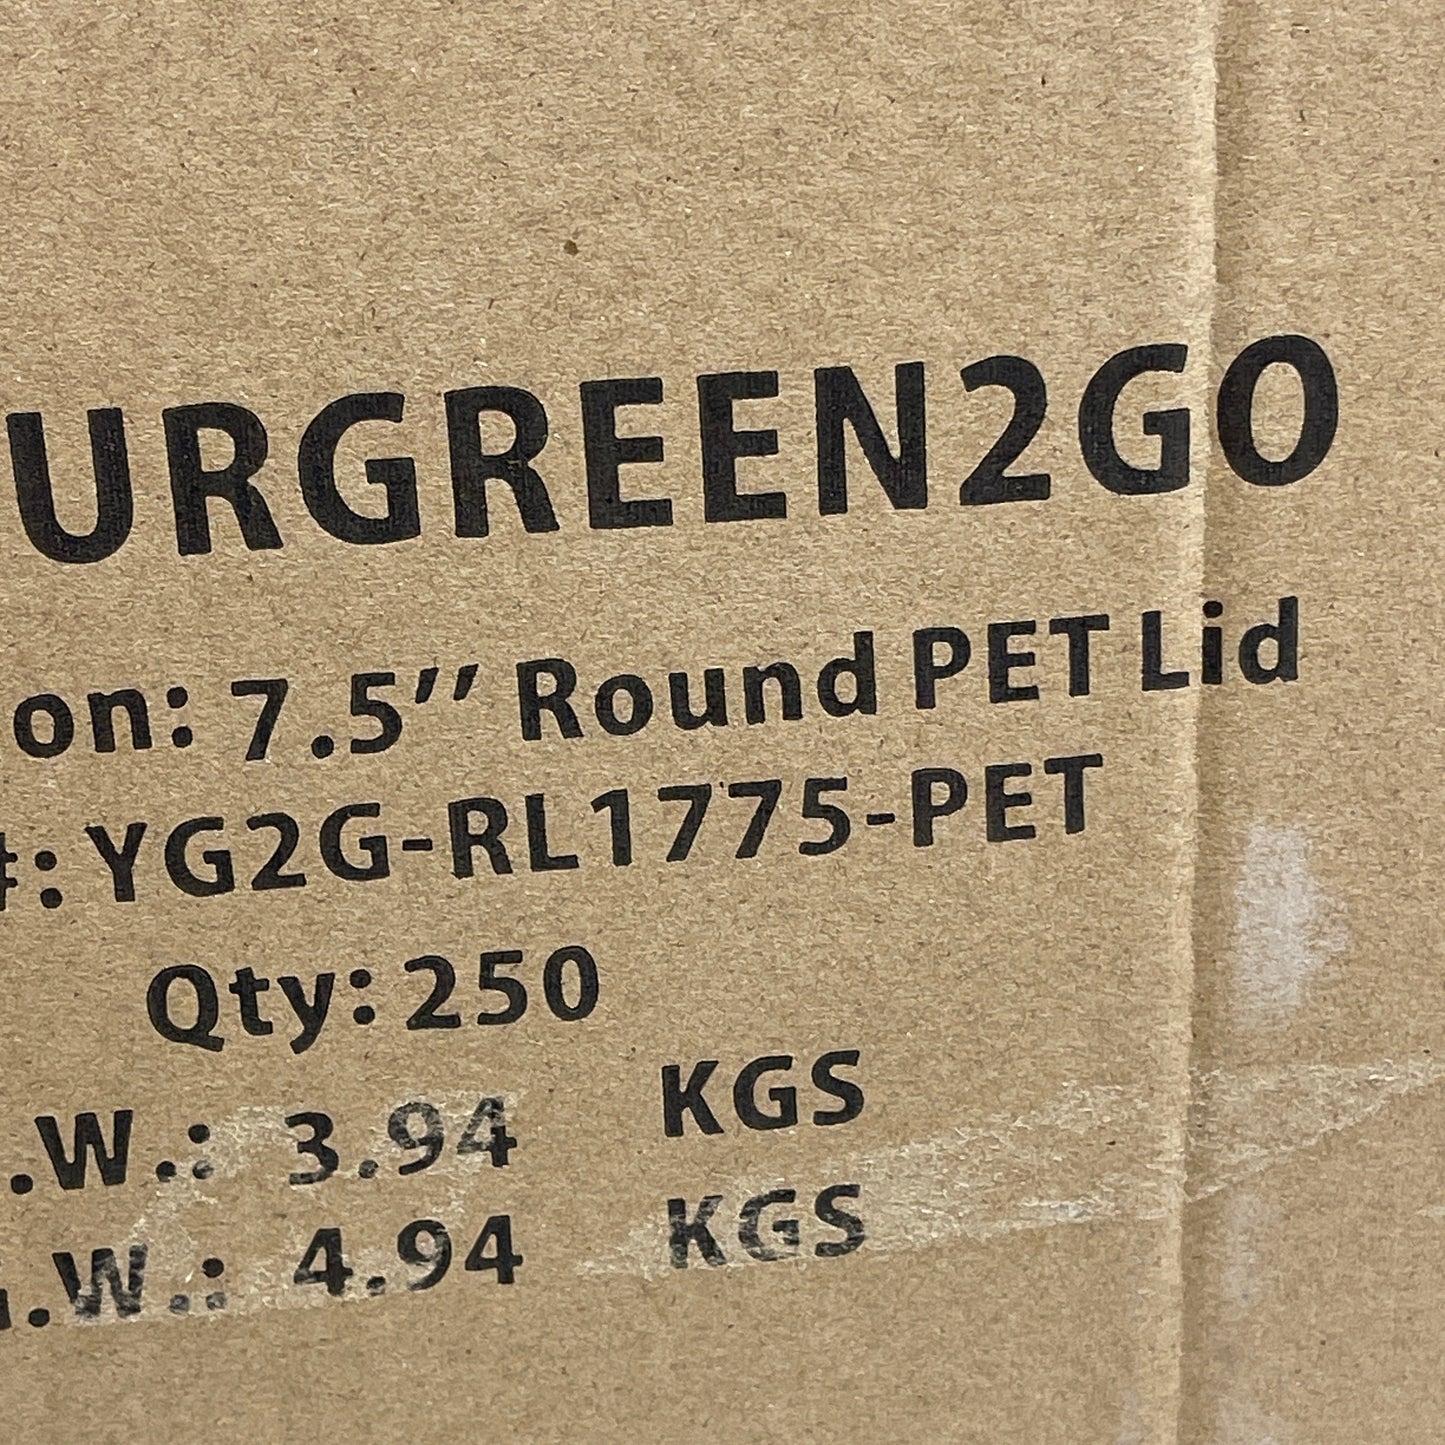 ZA@  YOURGREEN2GO PET (250 LIDS) Plastic Lids 7.5" Round Clear YG2G-RL1775-PET G